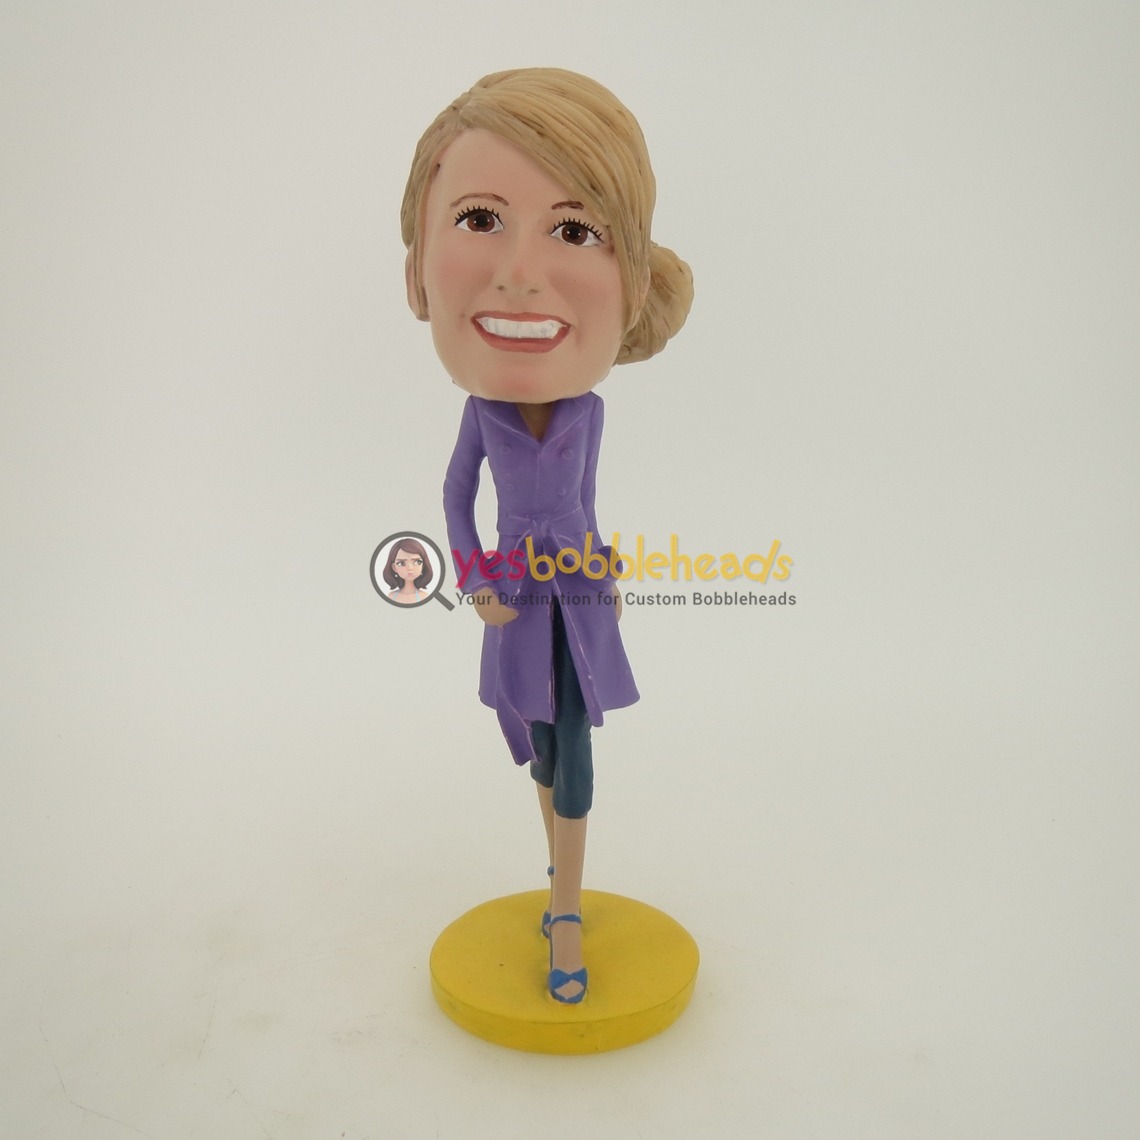 Picture of Custom Bobblehead Doll: Windbreaker Woman